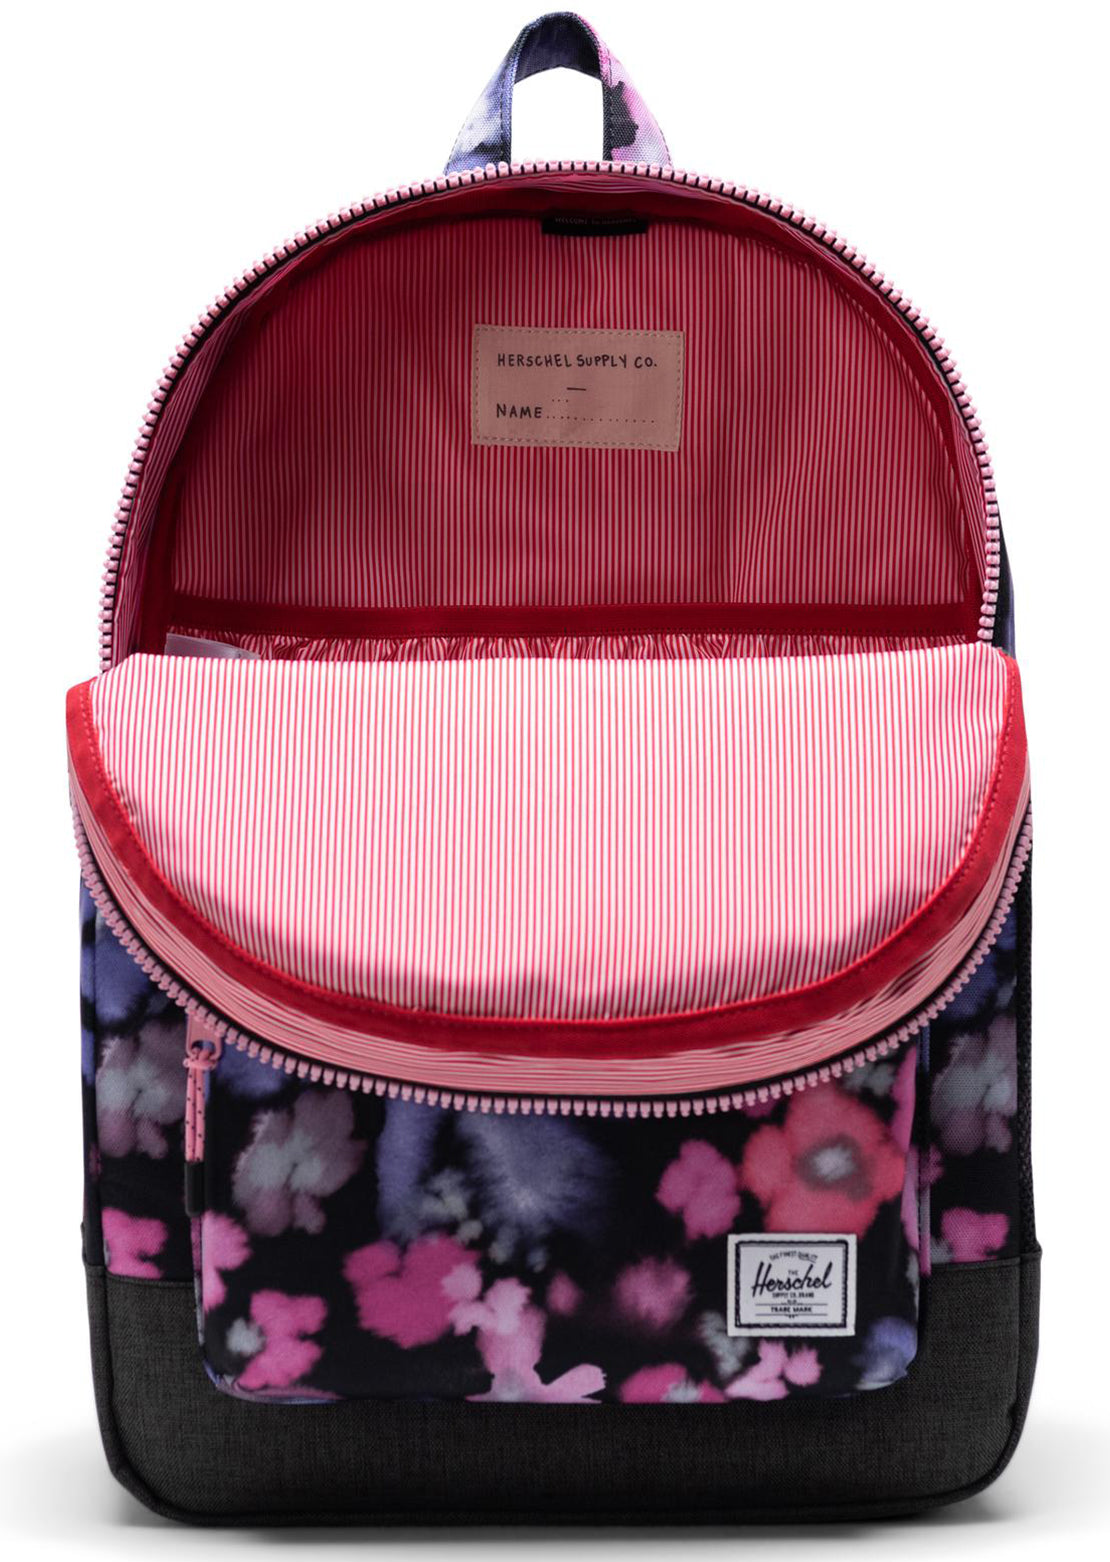 Herschel Junior Heritage XL Backpack Blurry Floral/Black Crosshatch